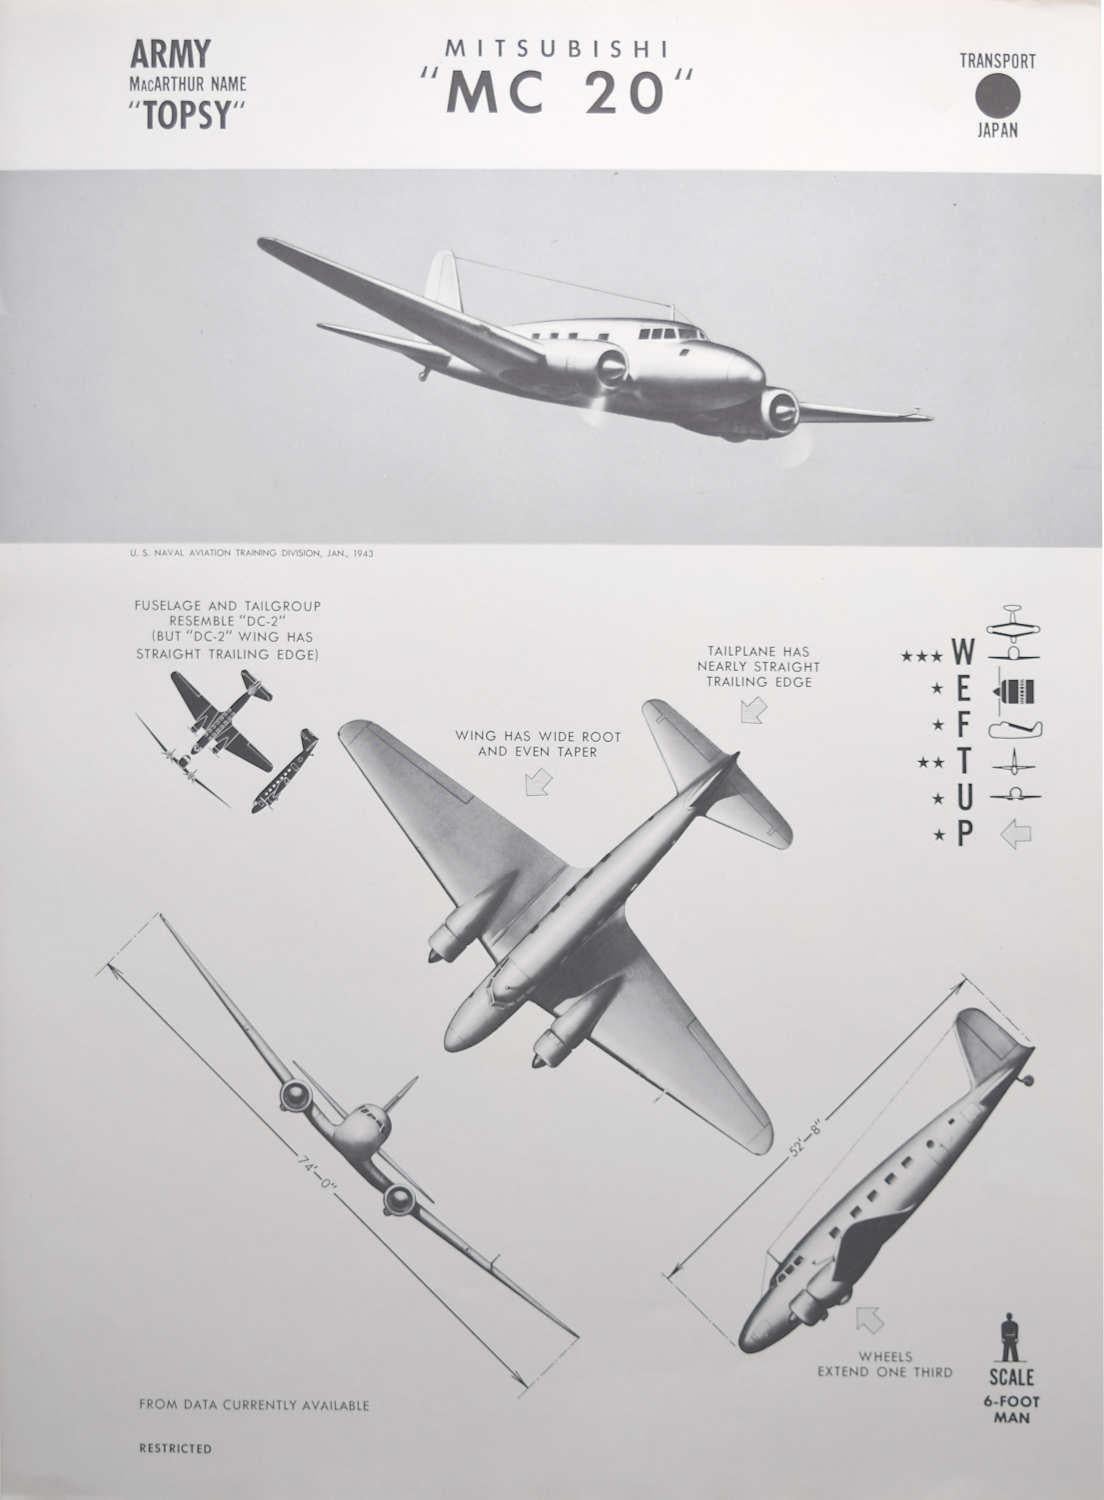 1942 Mitsubishi "MC 20" Japanese transport plane identification poster WW2 - Print by Unknown